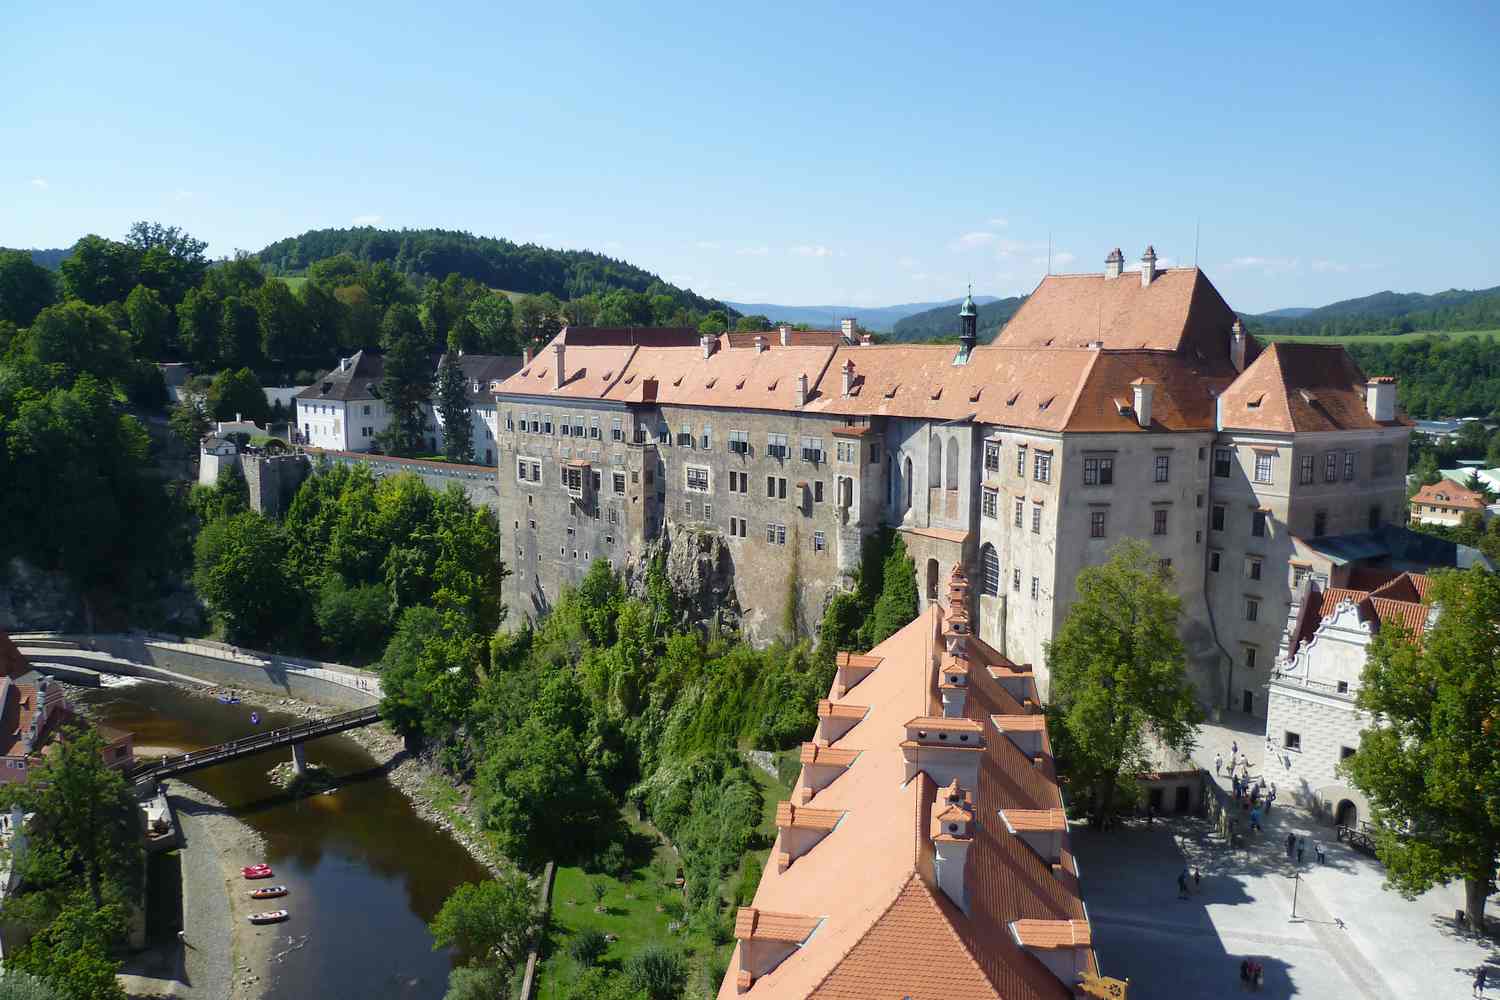 Czechoslovakia castles: Český Krumlov belongs to the Czech castles suitable for one day trip from Prague.